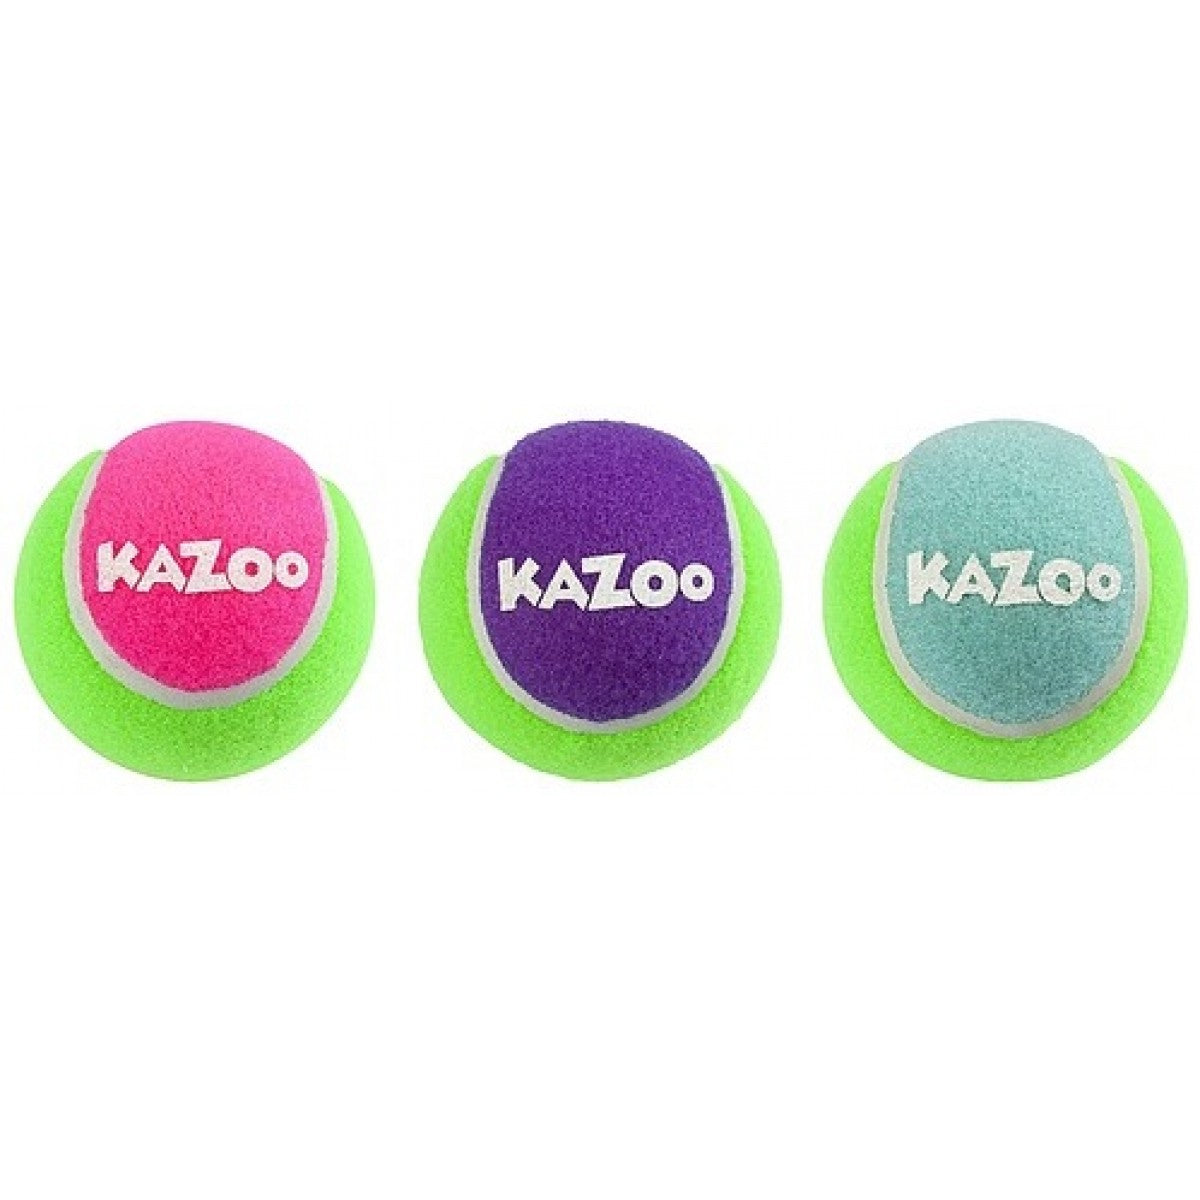 Kazoo- Sponge Tennis Ball - Large